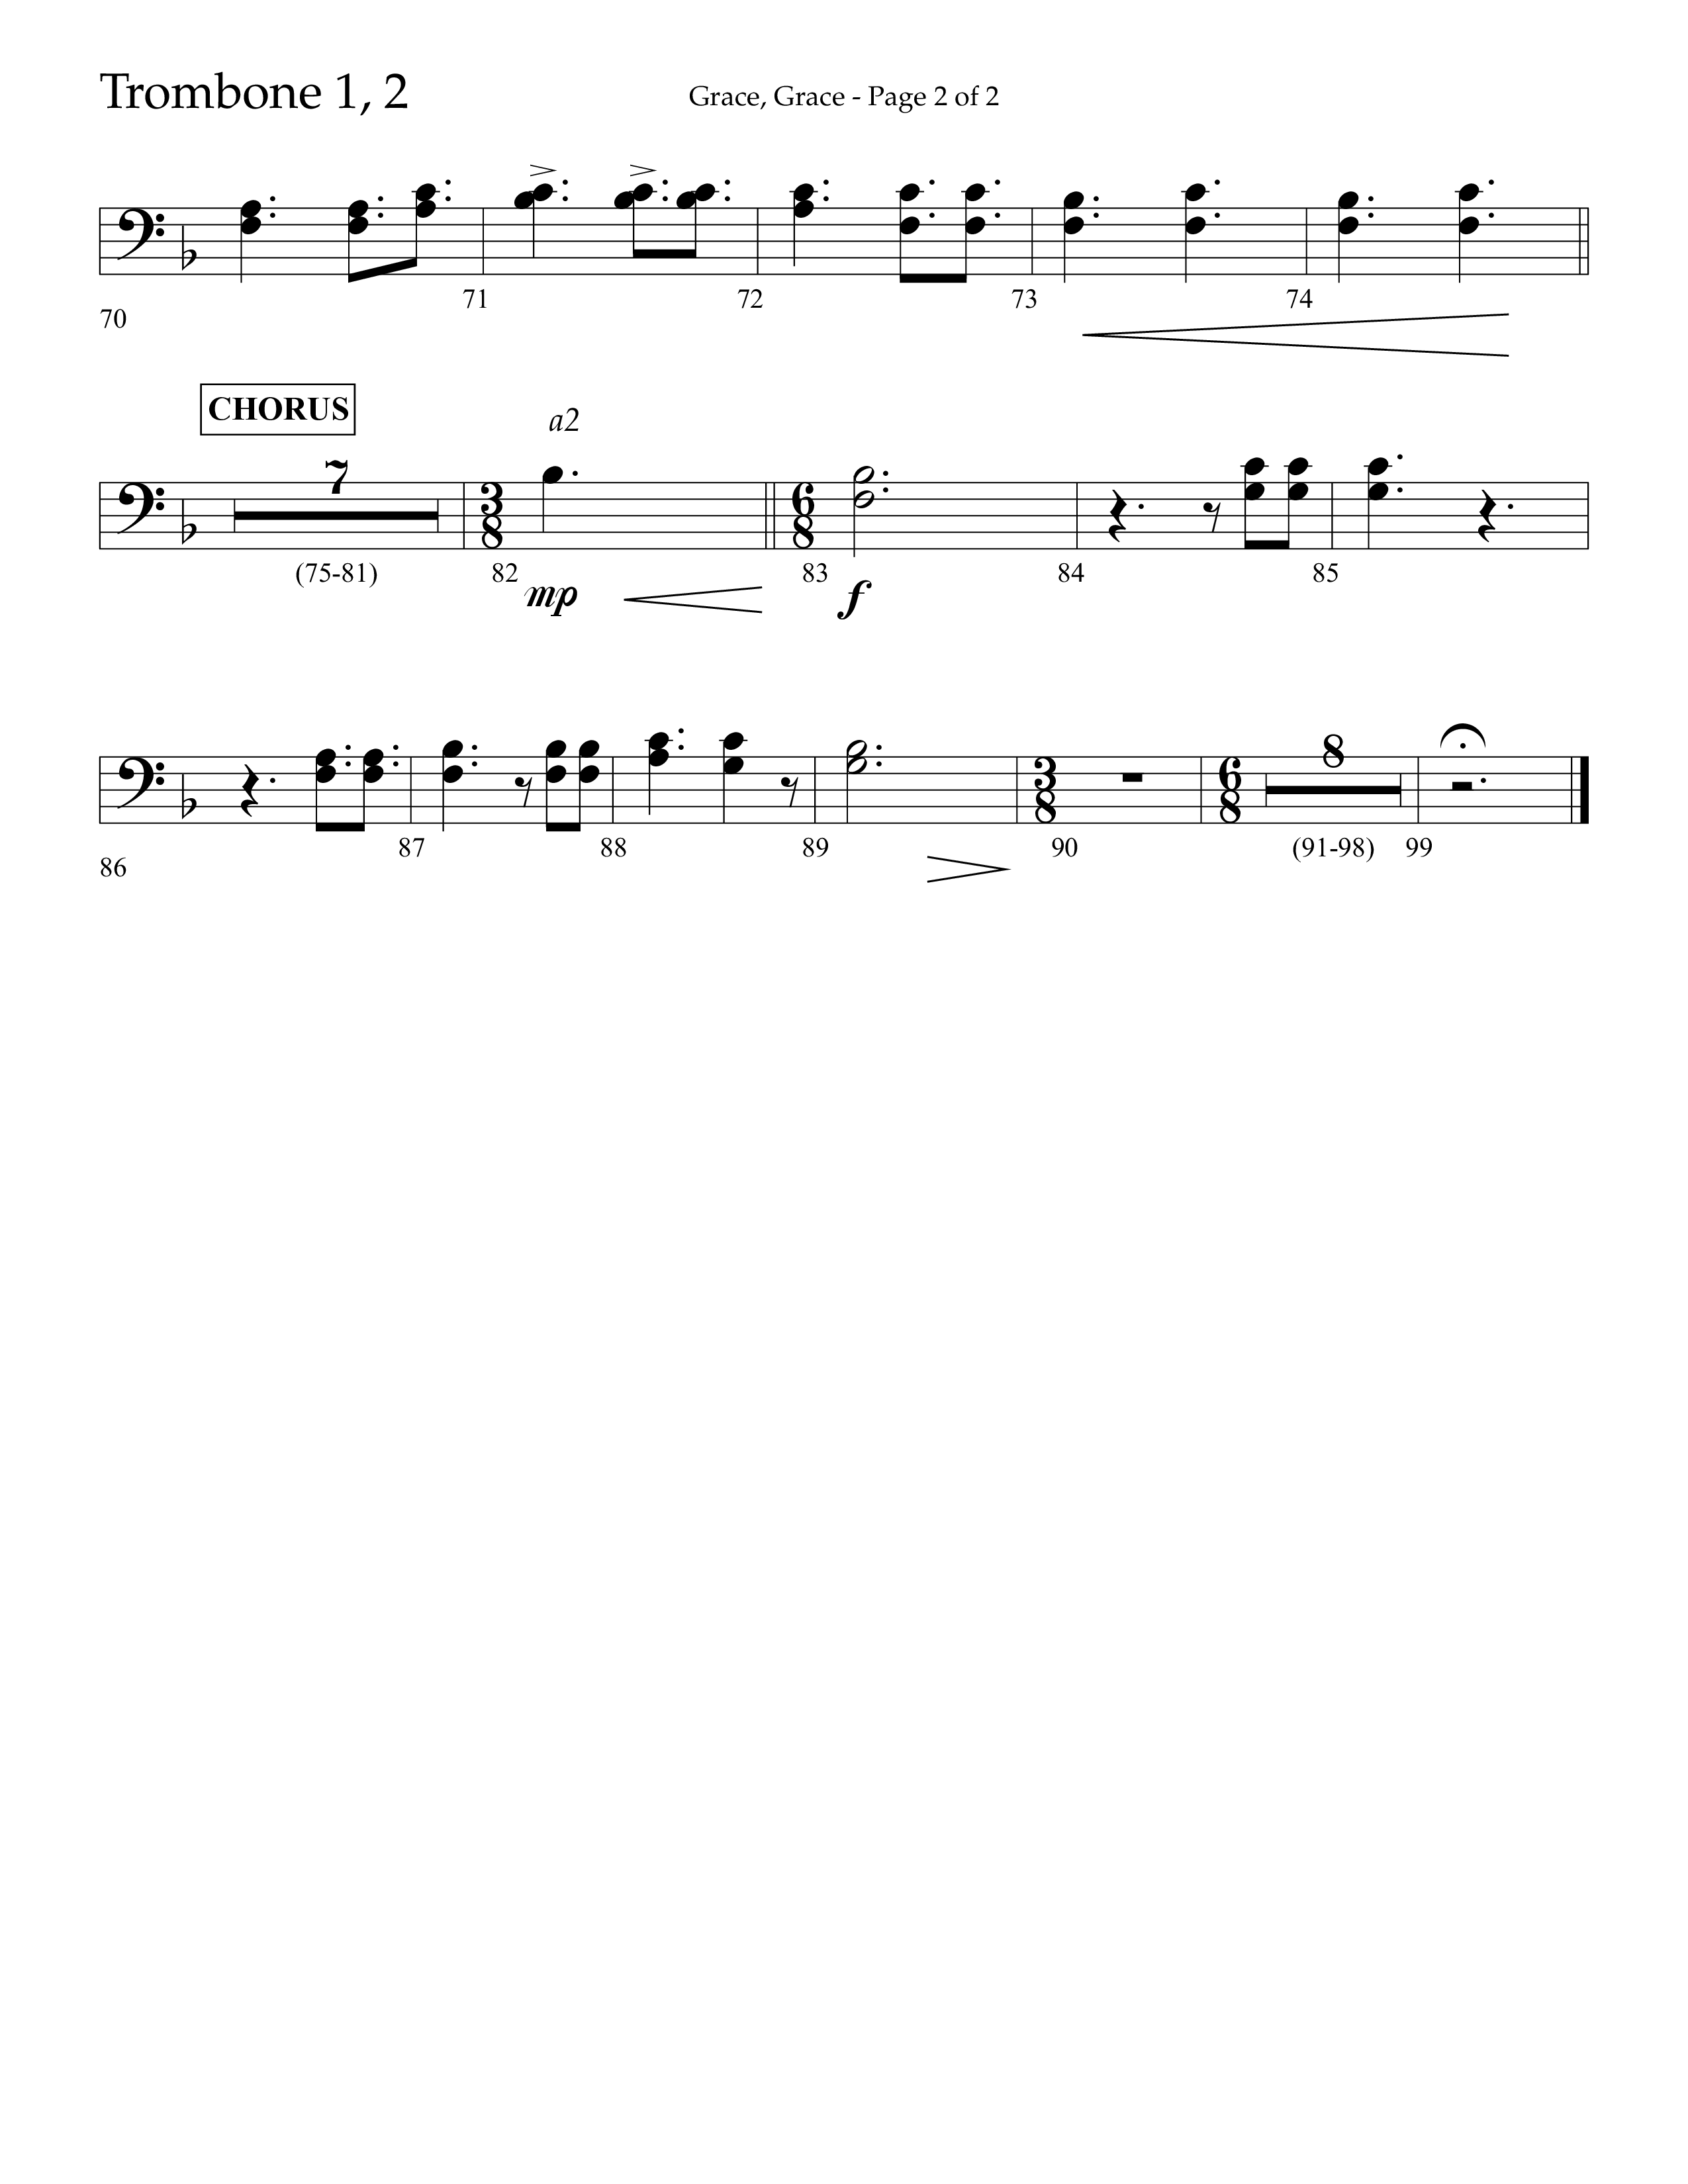 Grace Grace (Choral Anthem SATB) Trombone 1/2 (Lifeway Choral / Arr. John Bolin / Arr. Don Koch / Arr. Eric Belvin / Orch. Daniel Semsen)